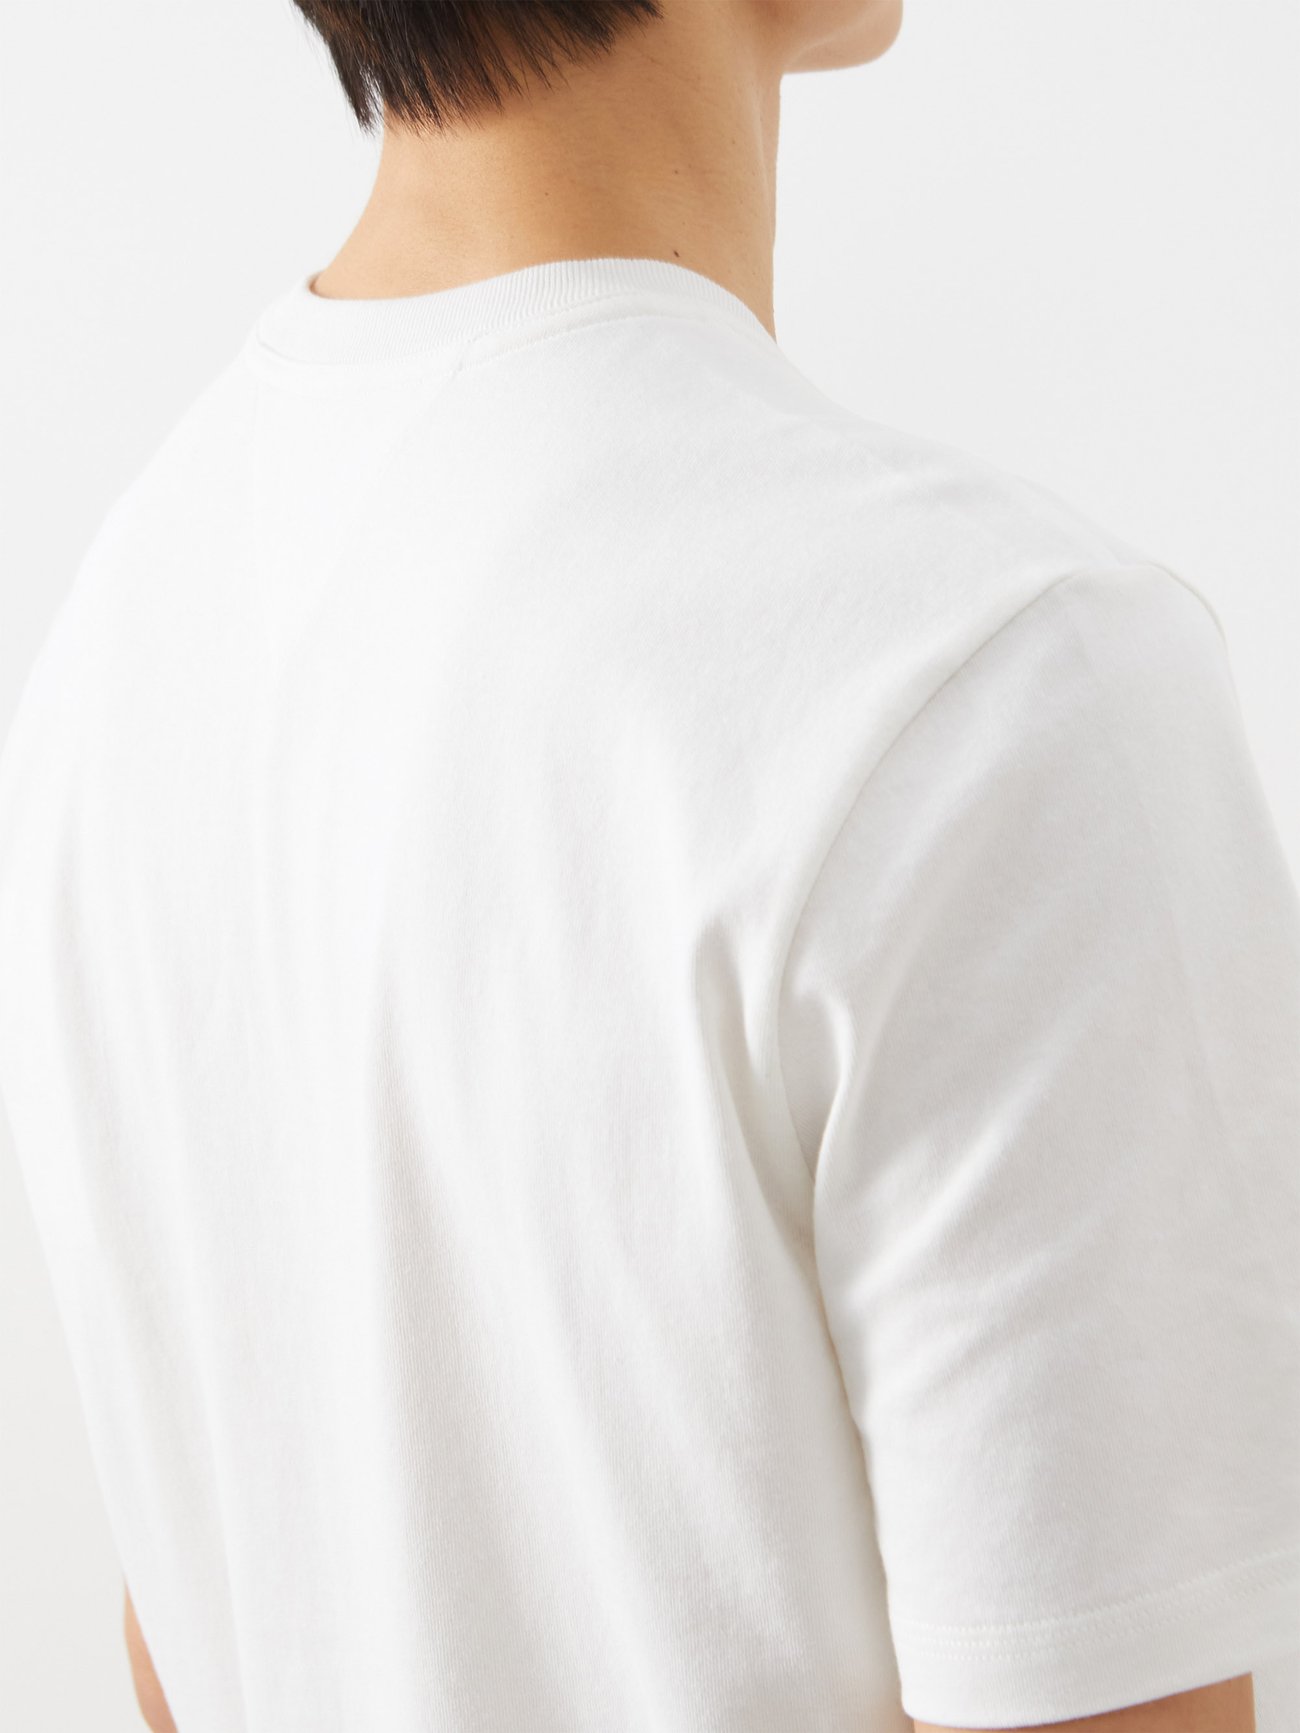 Chalk Sunrise cotton-jersey T-shirt, Bottega Veneta